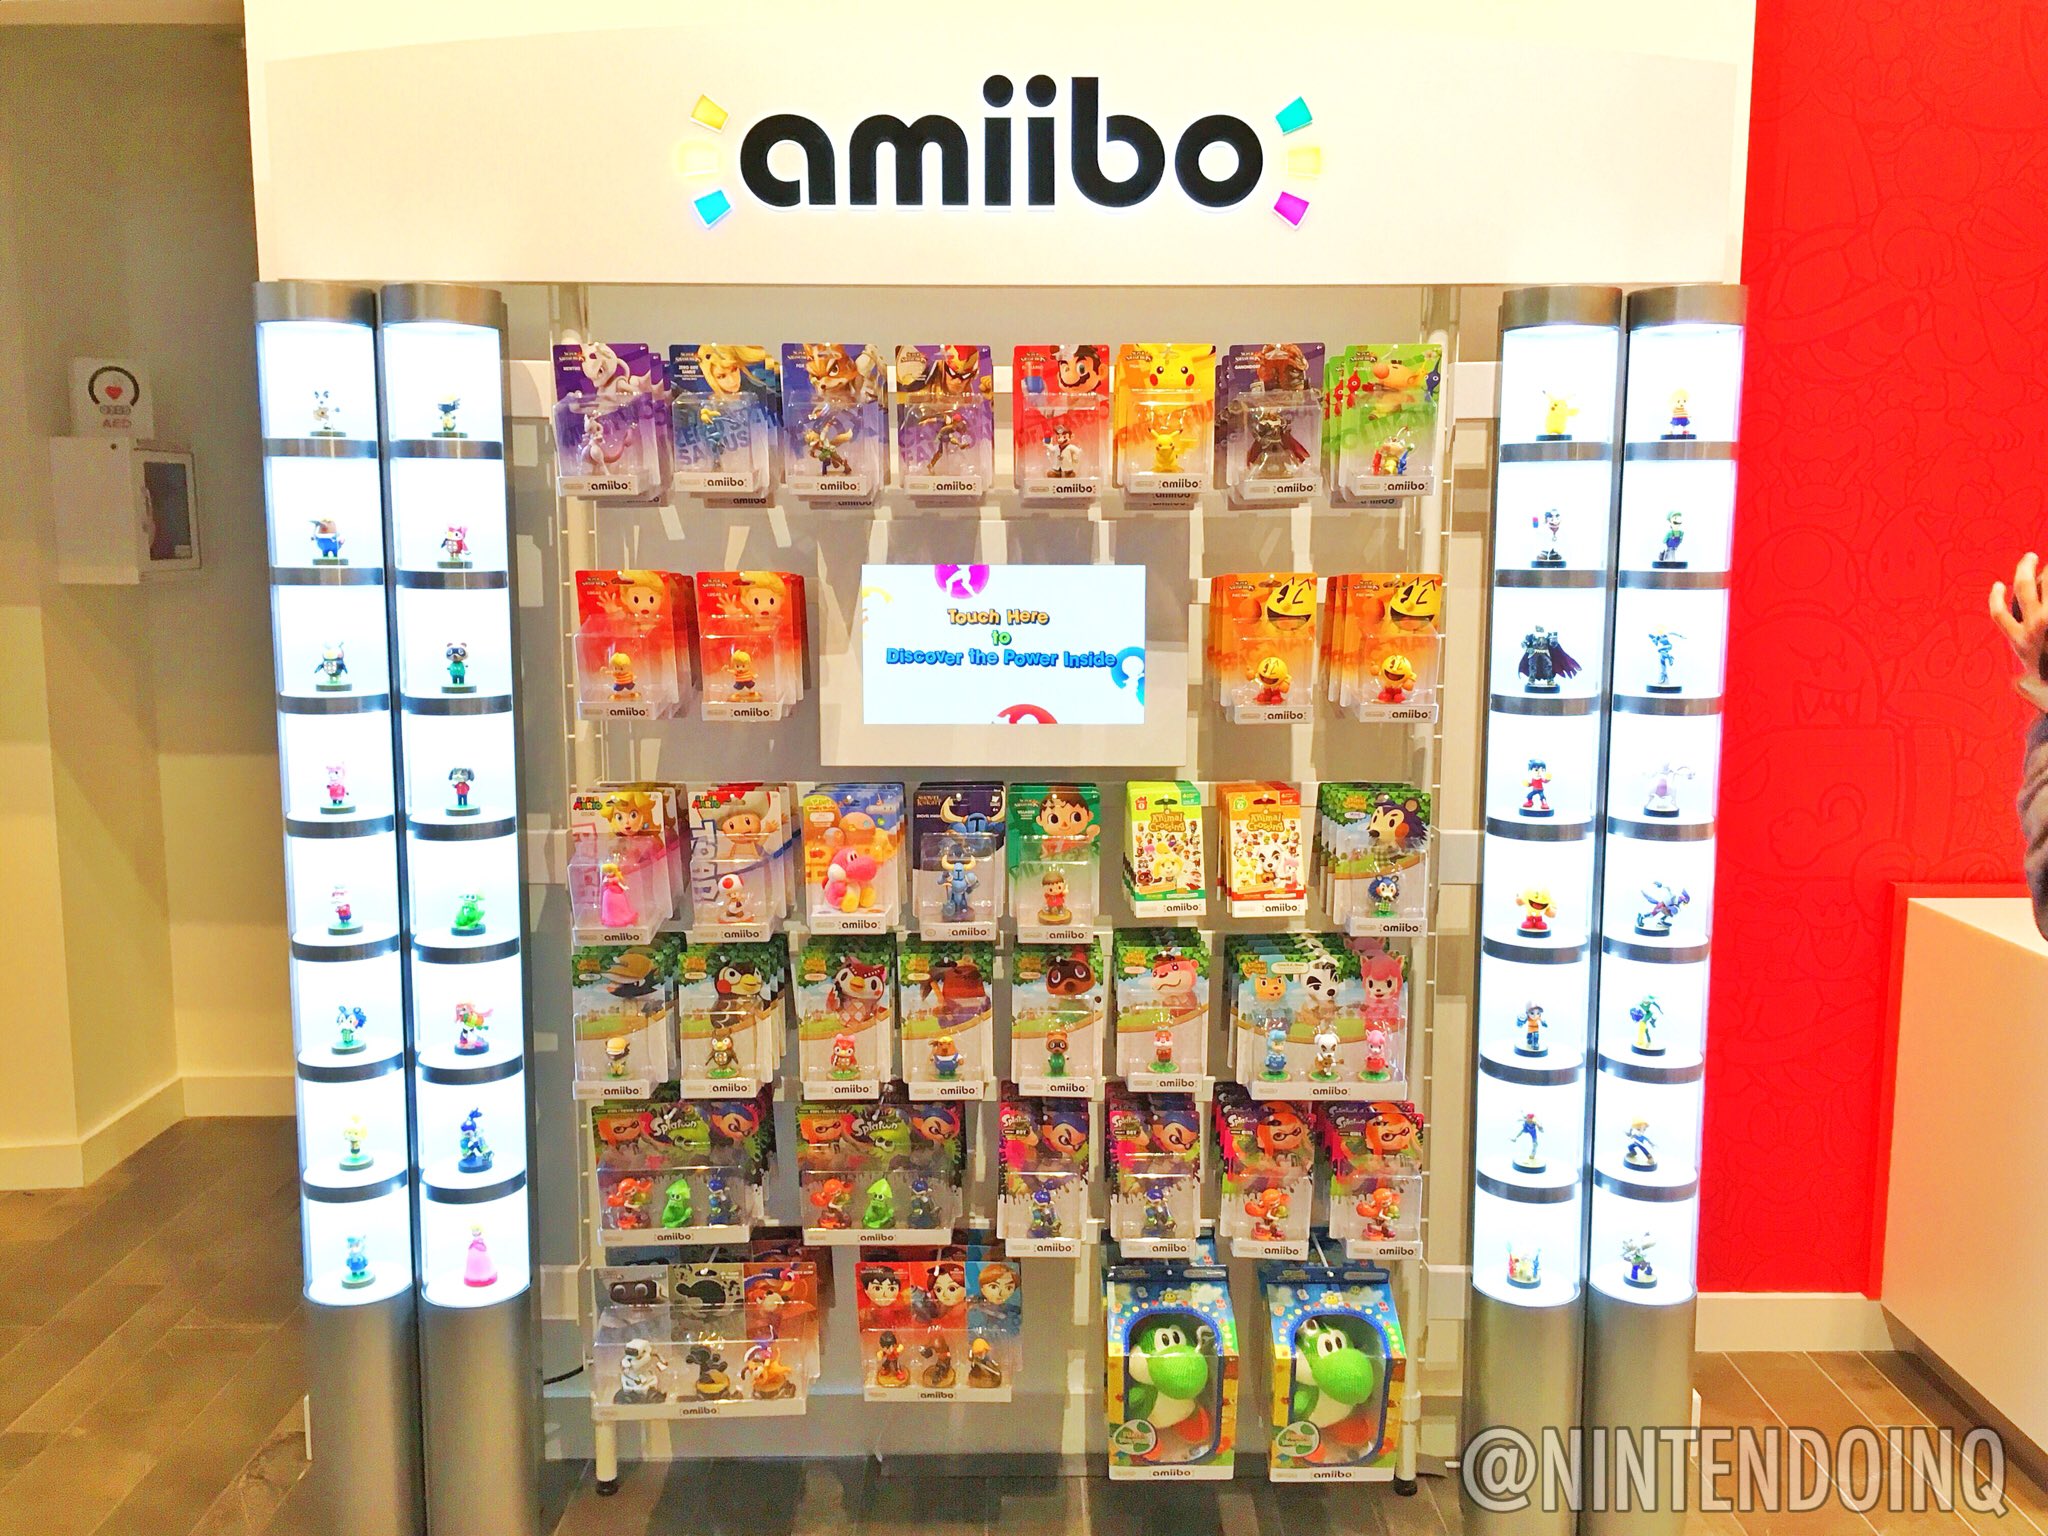 Amiibo News on Twitter: amiibo Nintendo New York! Even Mega Yarn Yoshi is here! https://t.co/kbFZLbKHHb" /